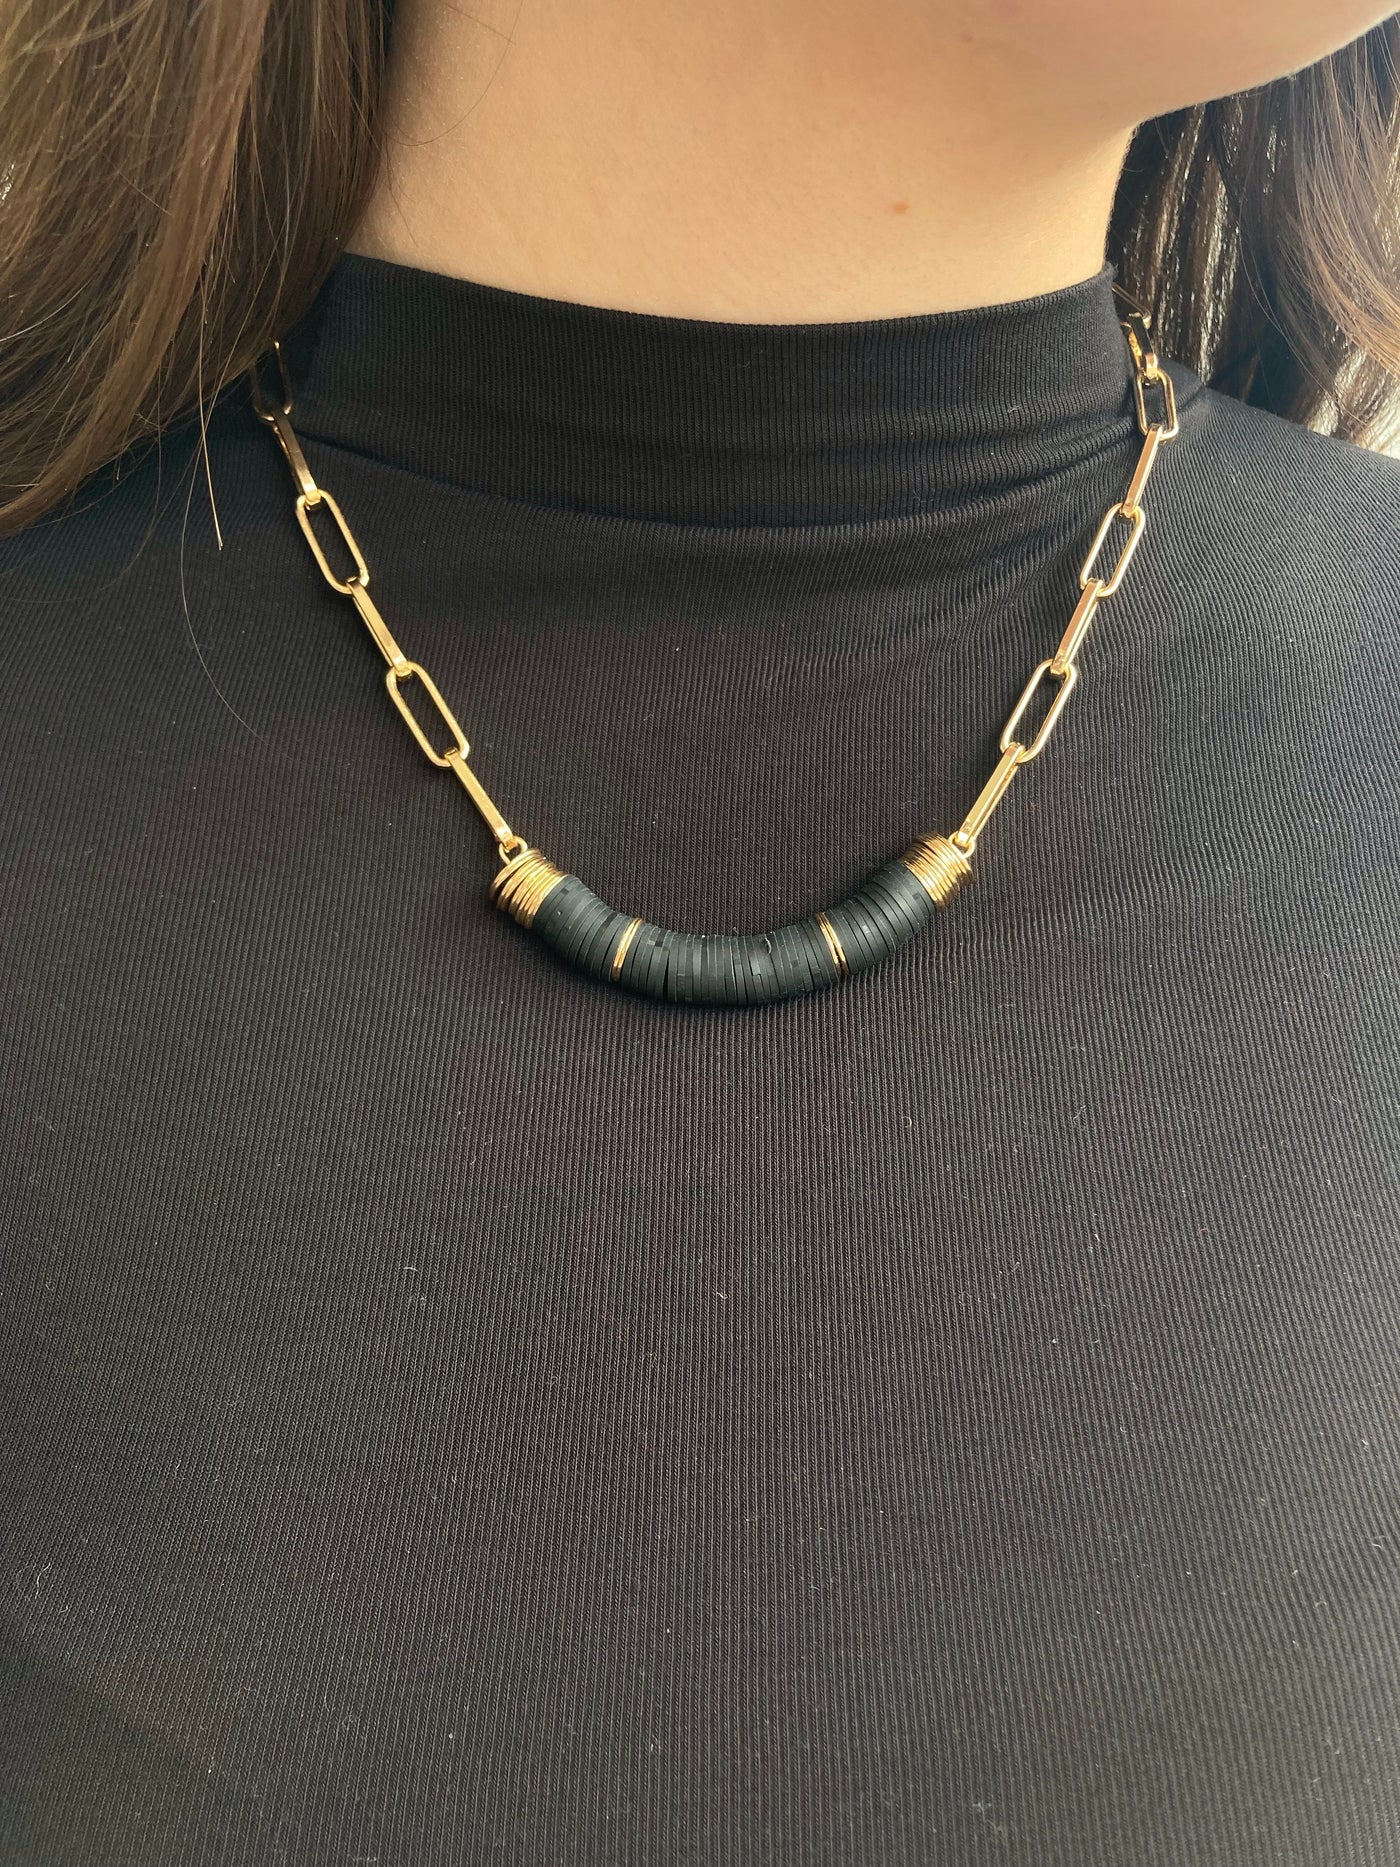 Black rubber statement necklace